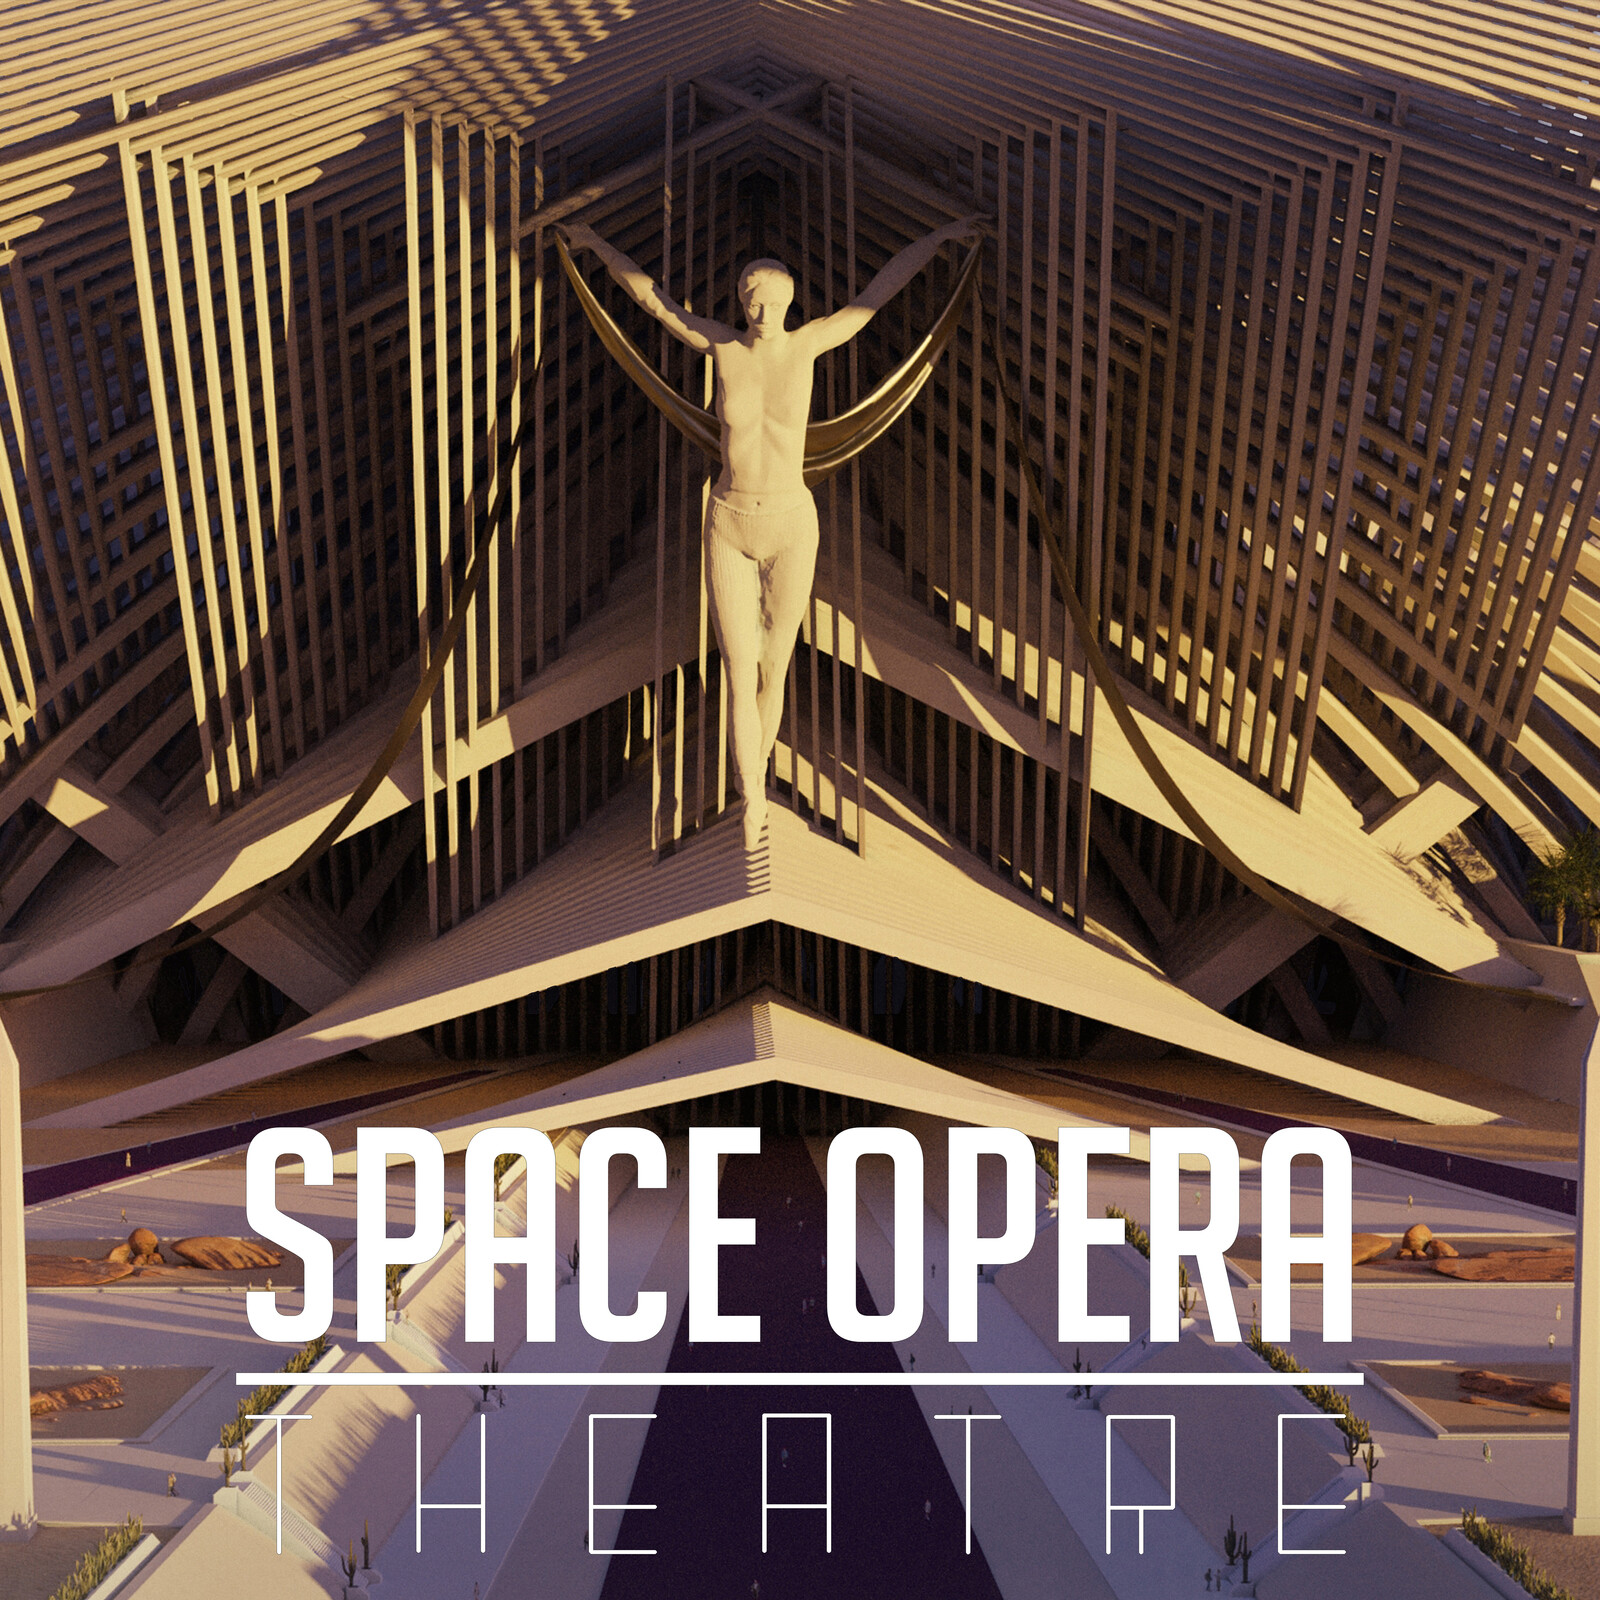 Space opera theatre